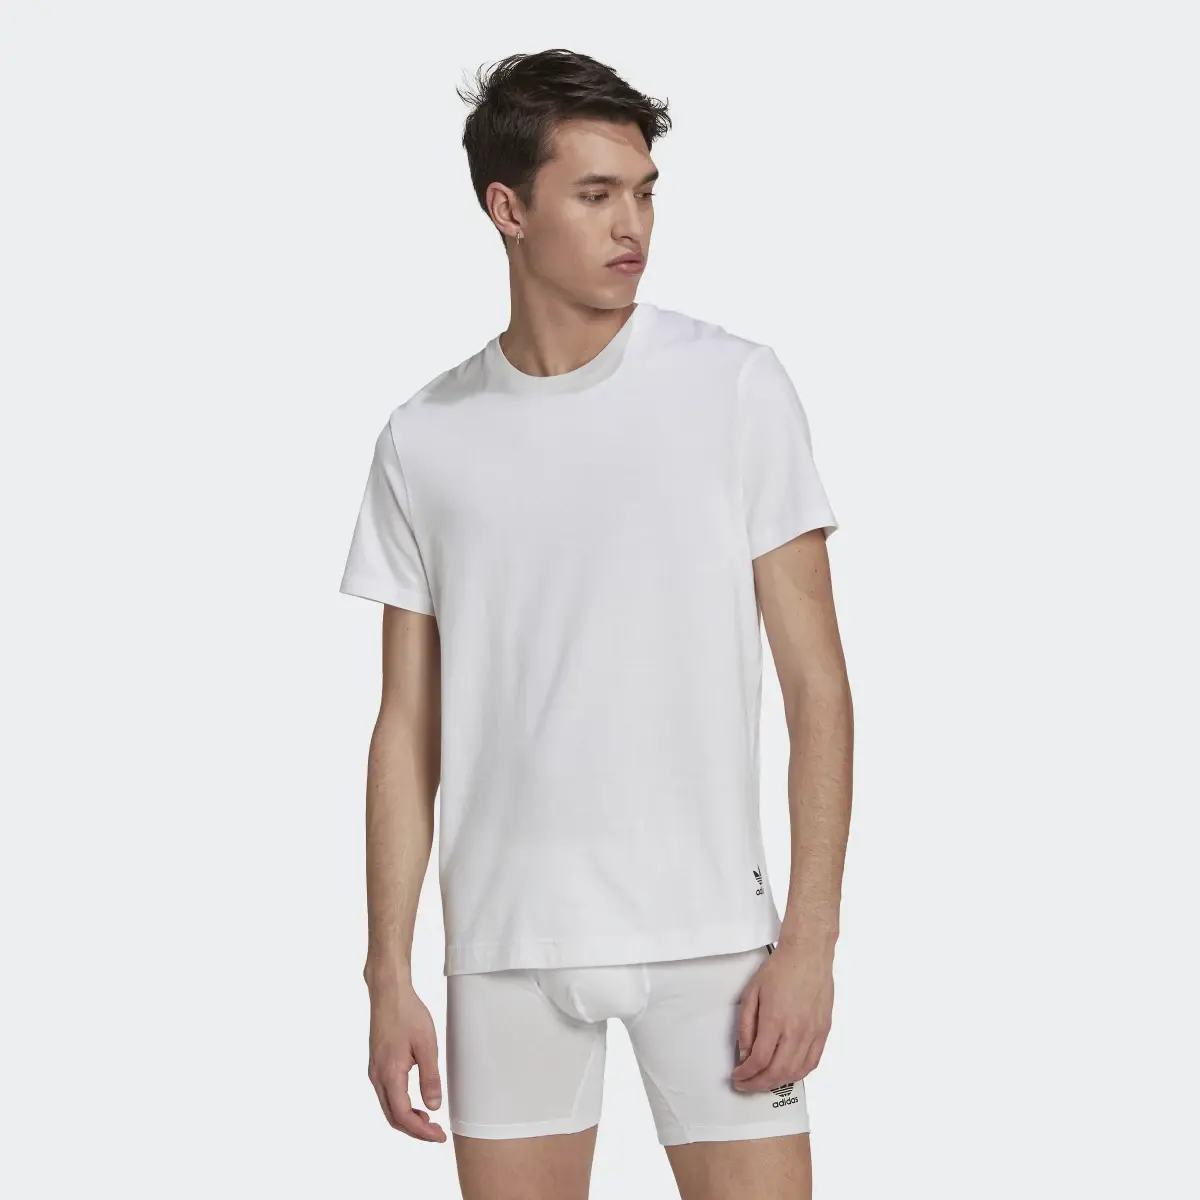 Adidas Comfort Core Cotton Crewneck T-Shirt Underwear. 2